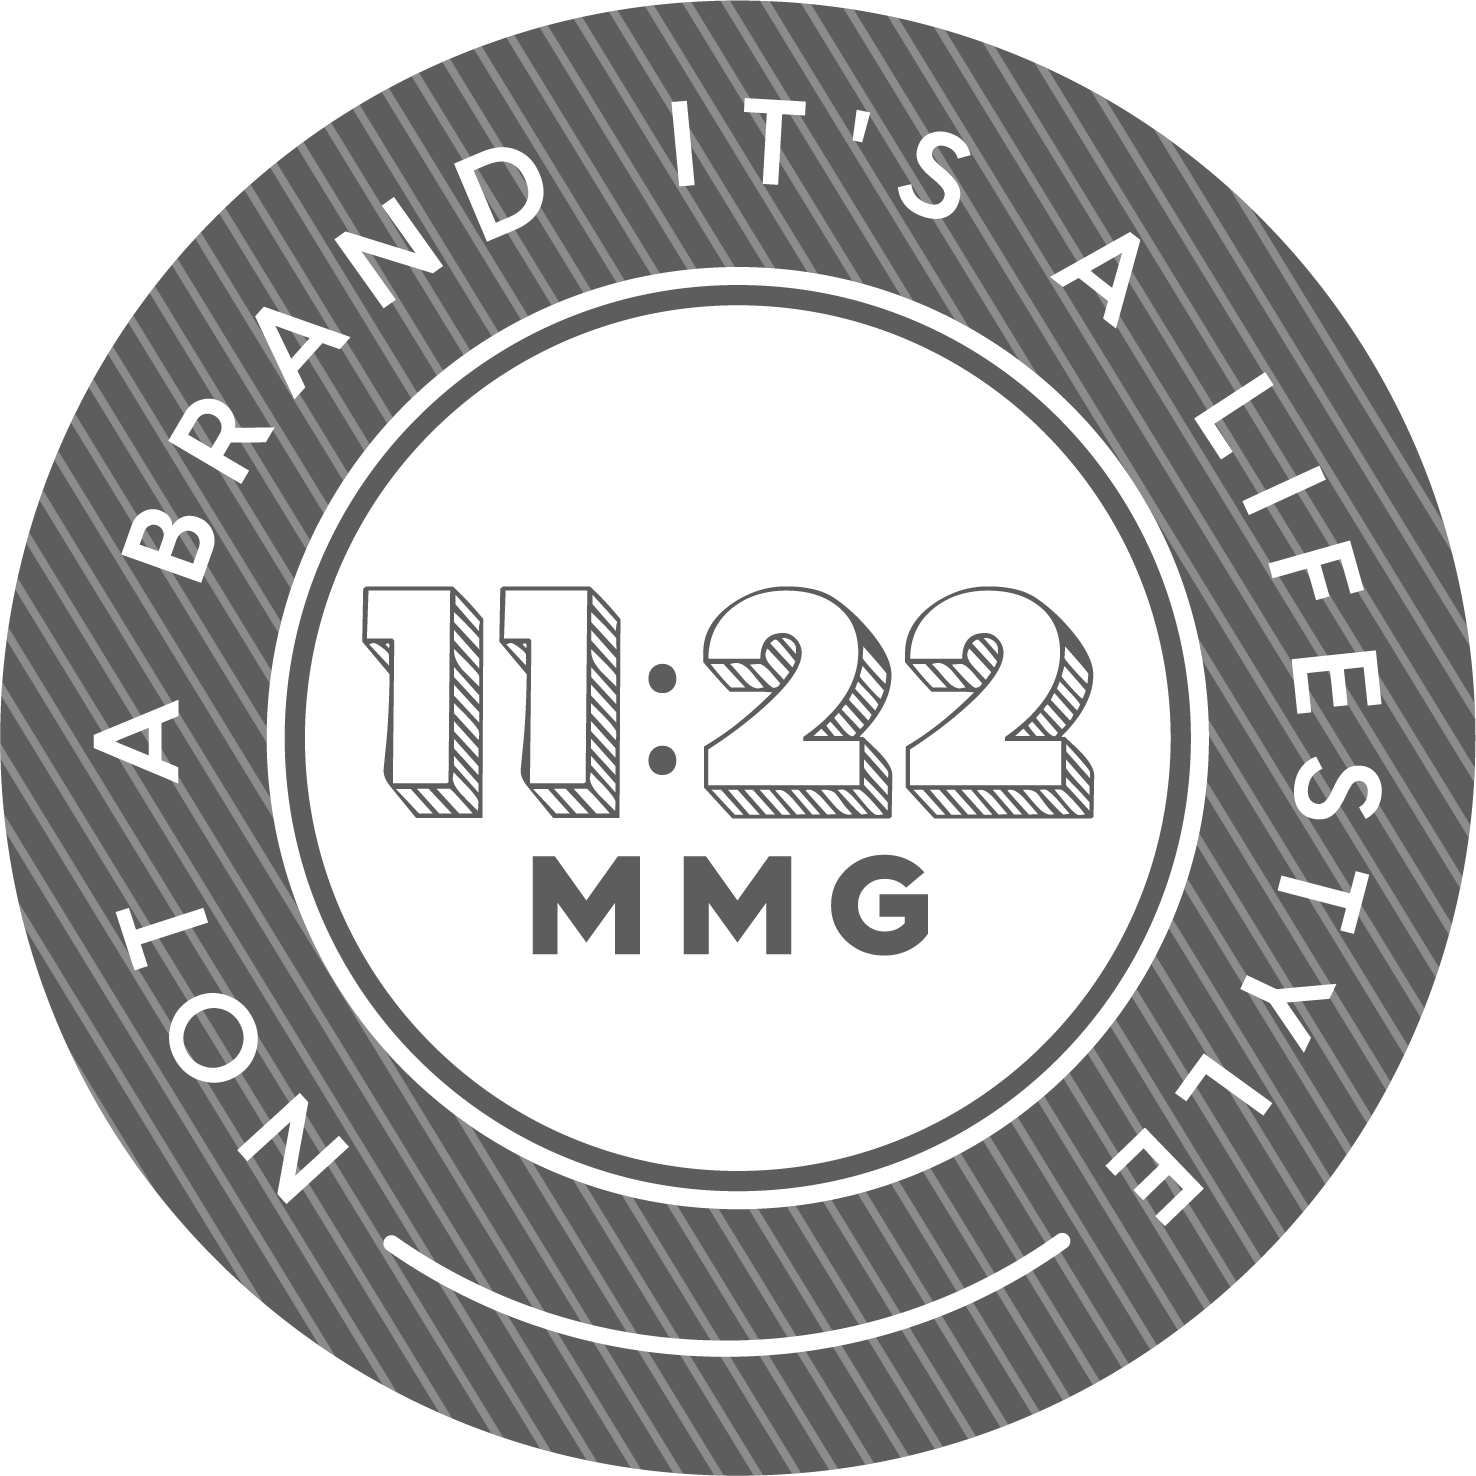 11:22 MultiMedia Group LLC